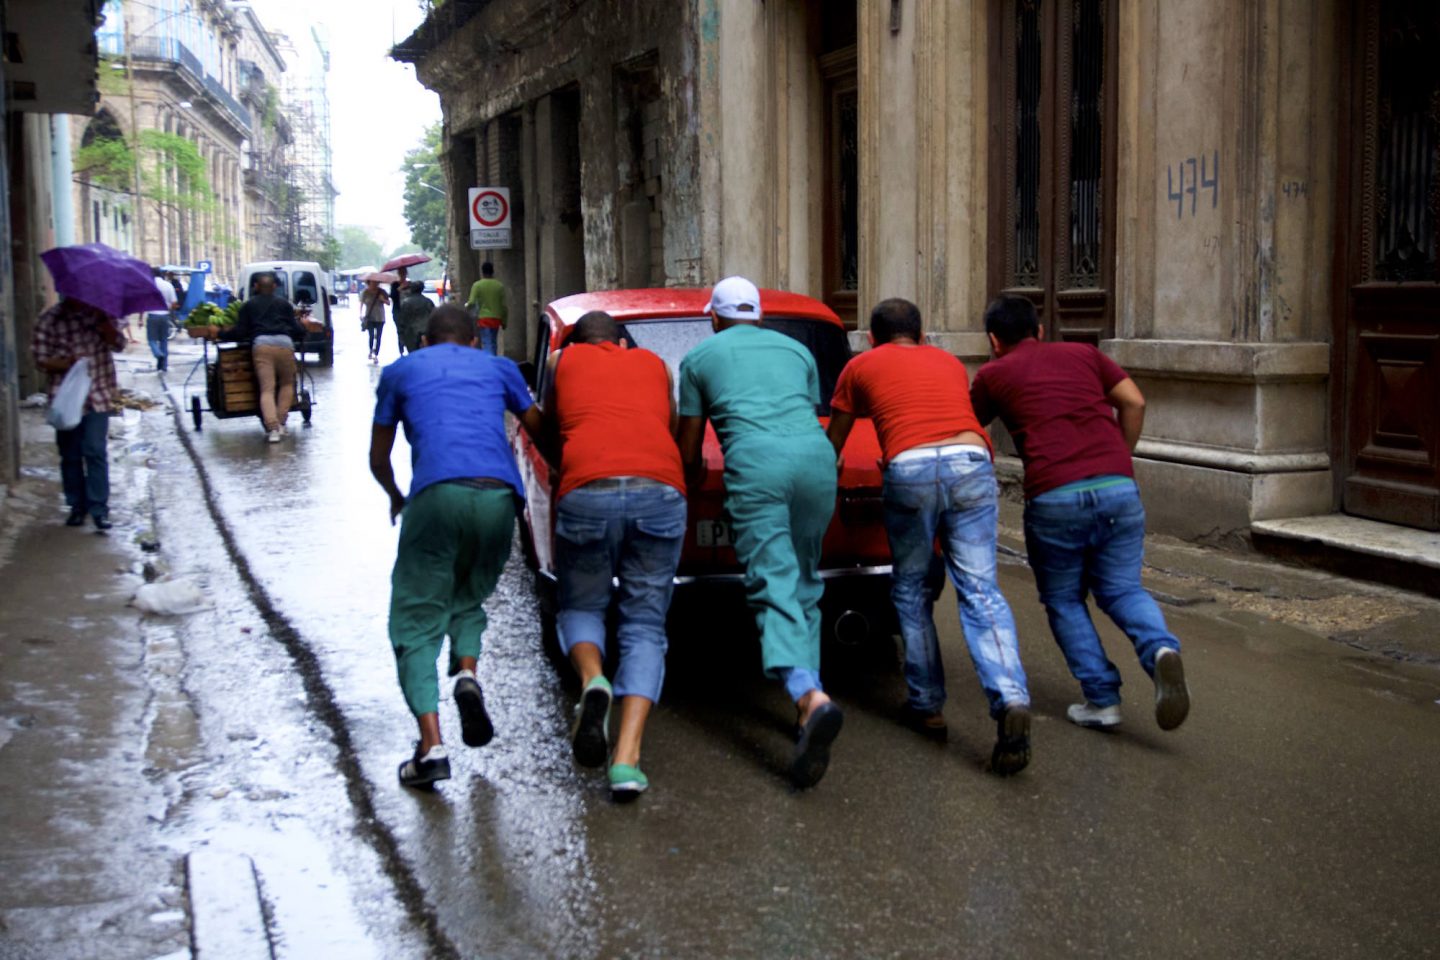 Men pushing a broken car in Havana. Daily life in Cuba.